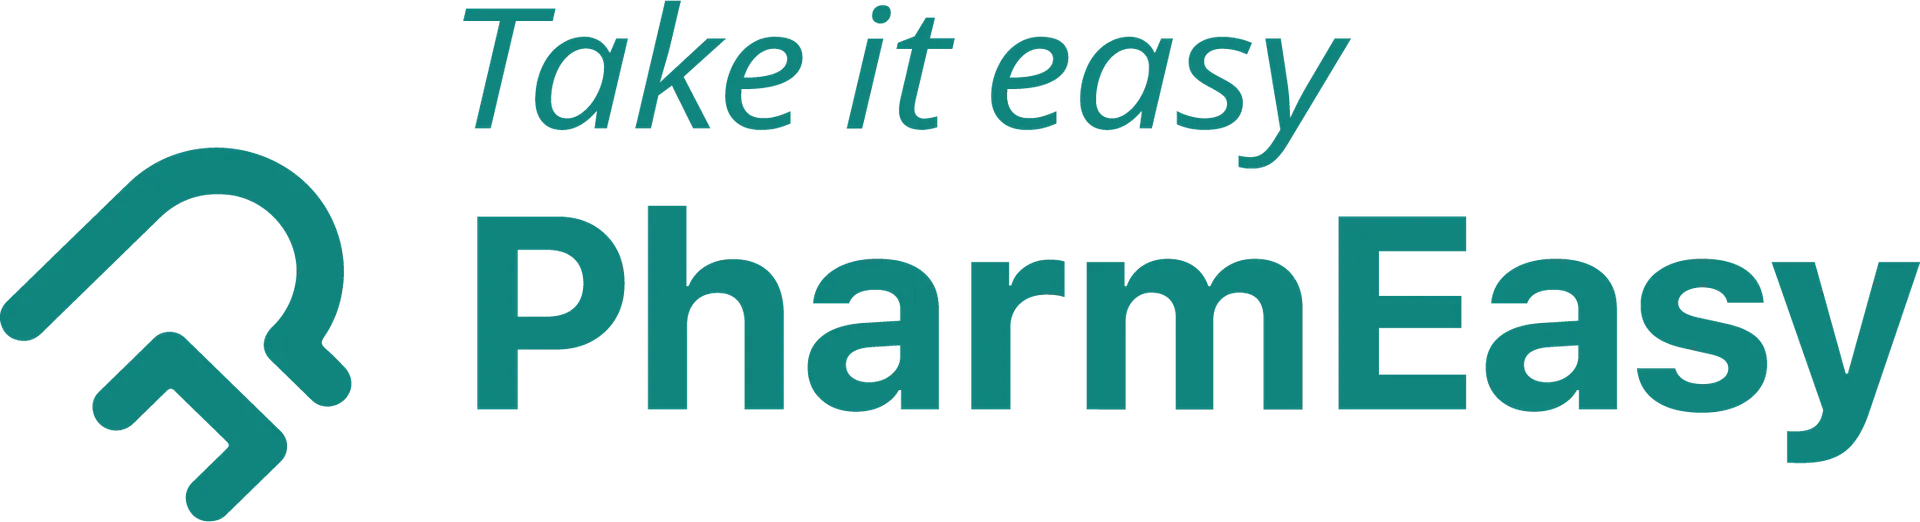 PHARMEASY logo. Current weekly ad